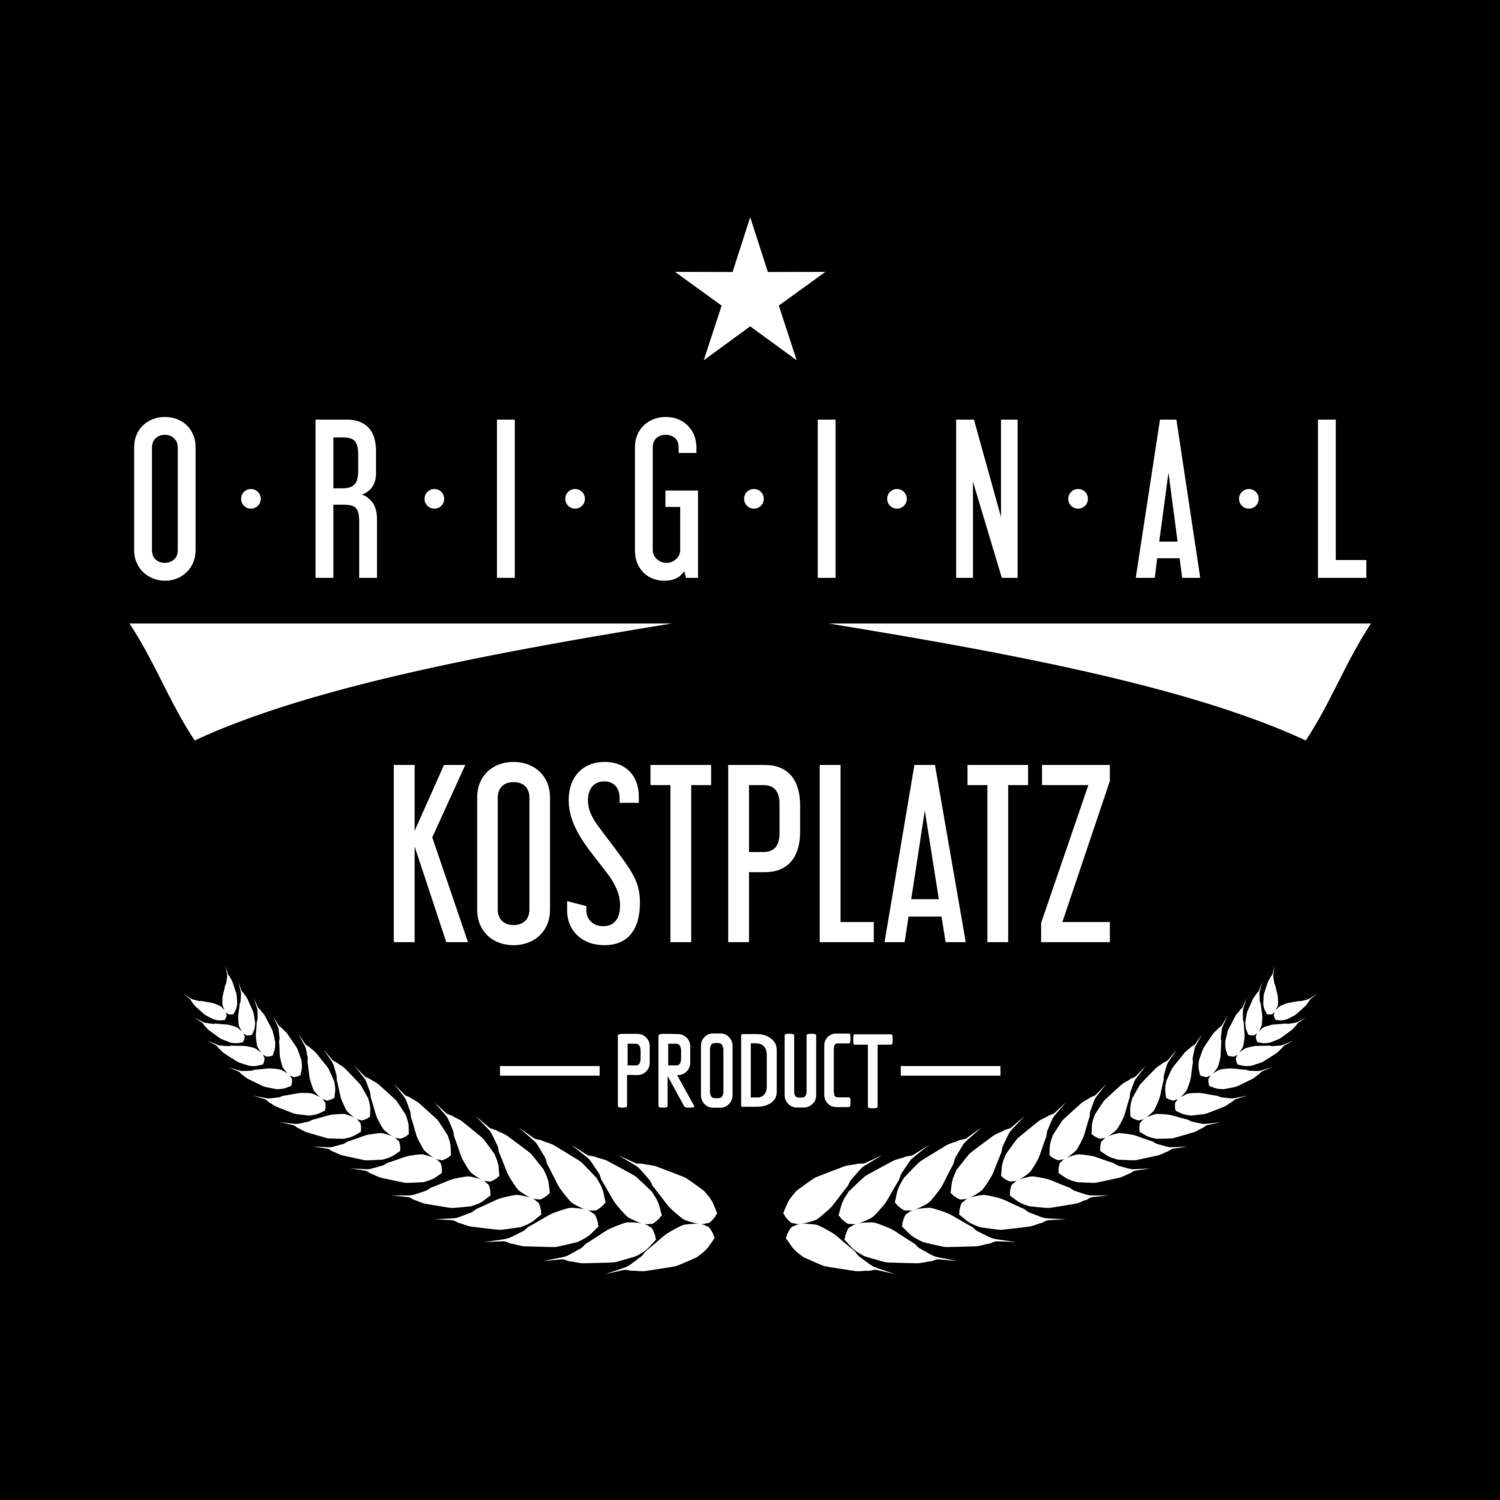 Kostplatz T-Shirt »Original Product«